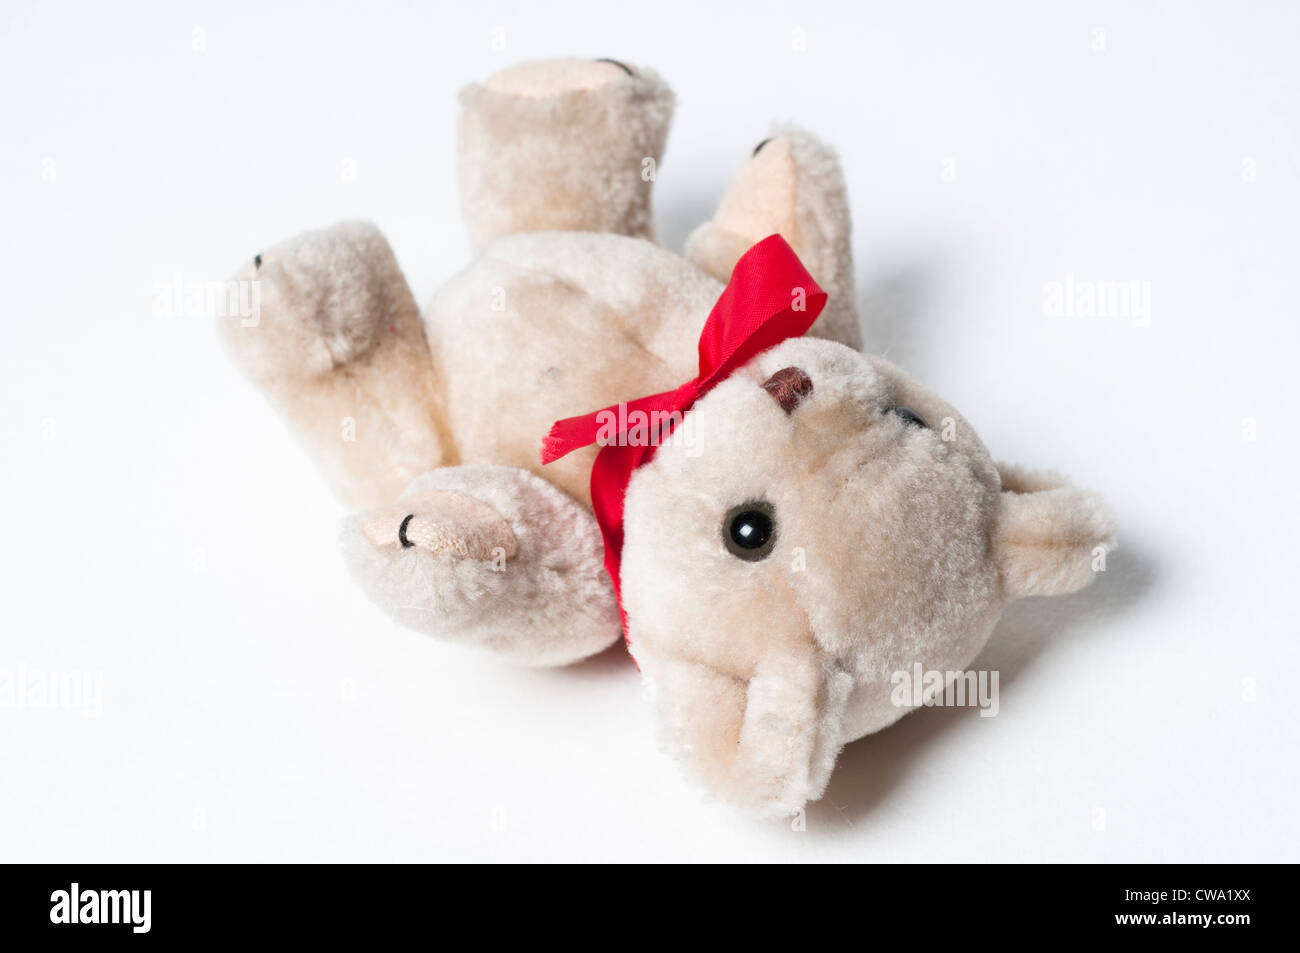 Little teddy bear on its back Stock Photo